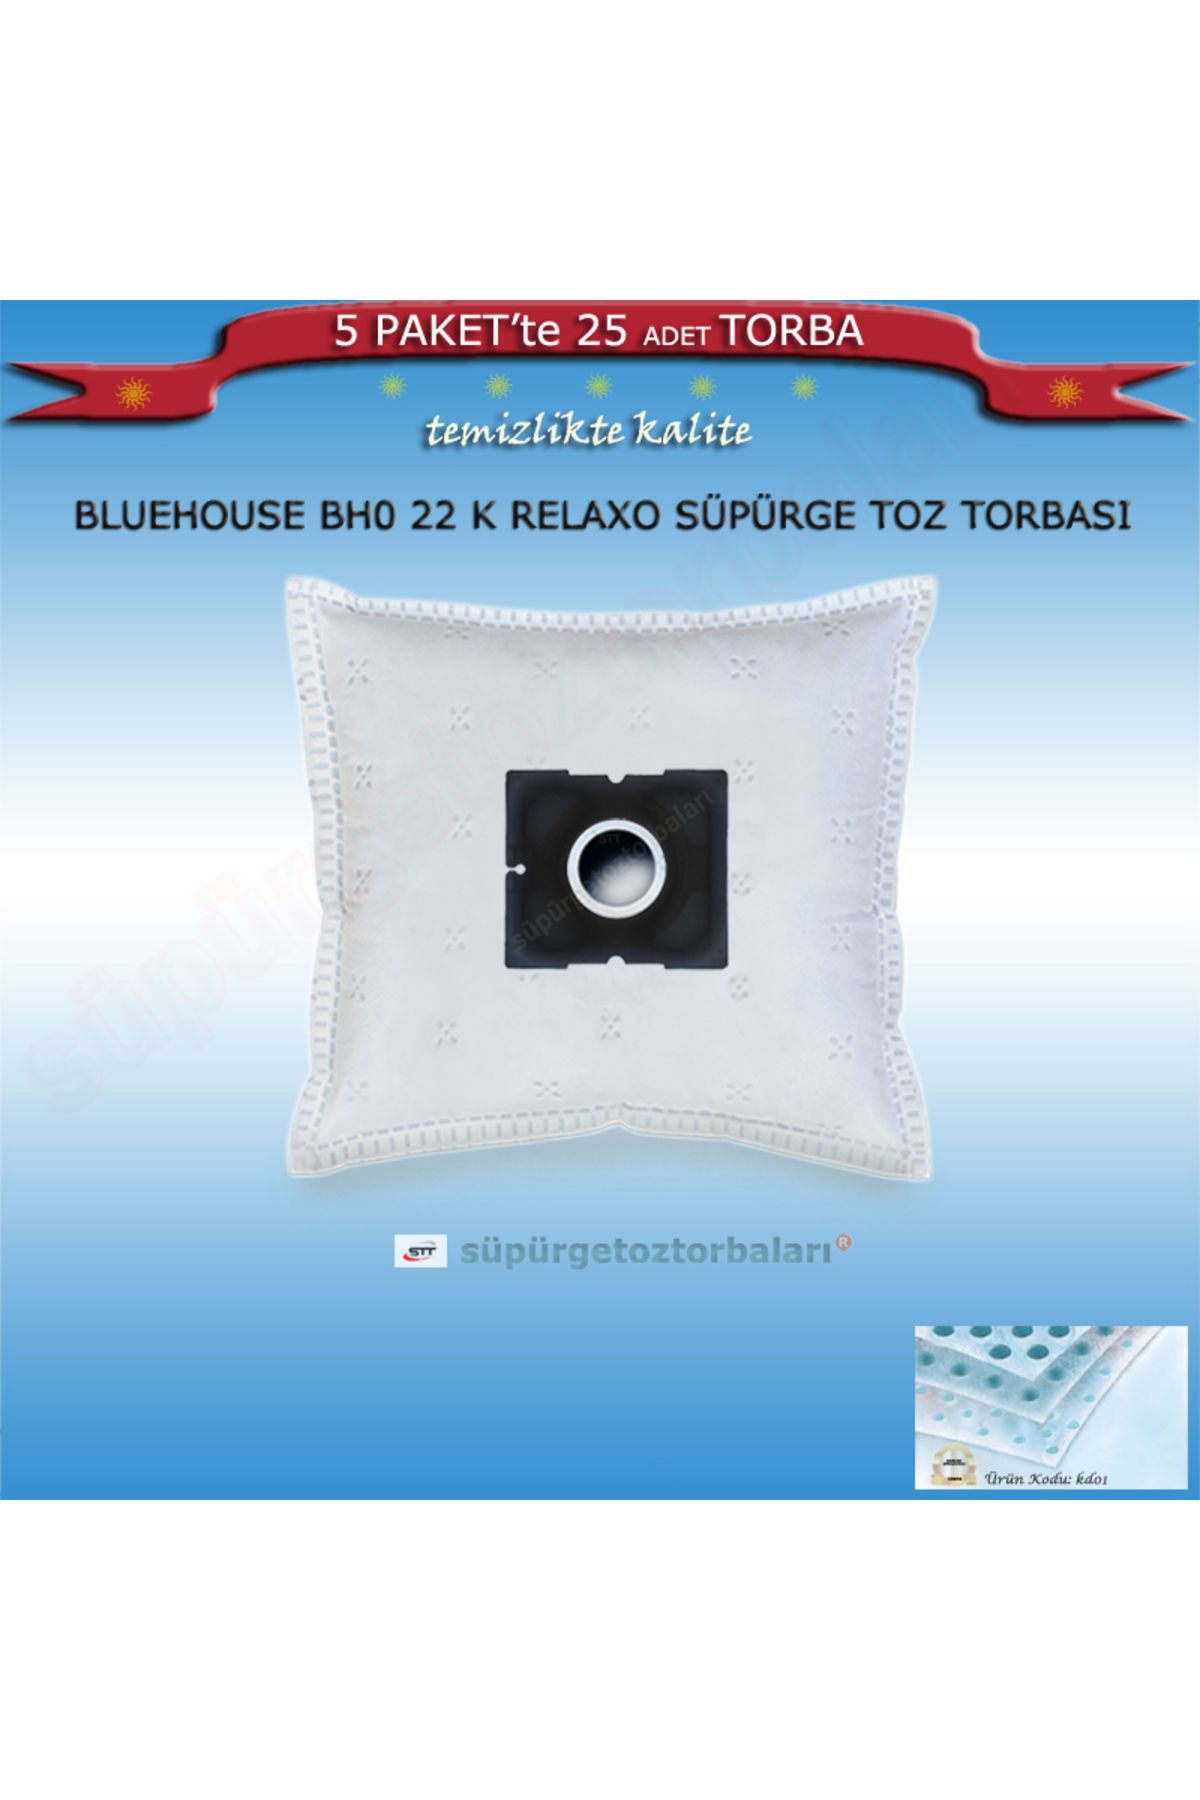 BLUE HOUSE Bluehouse Bh0 22 K Relaxo Süpürge Toz Torbası 25 Adet Torba Kd01